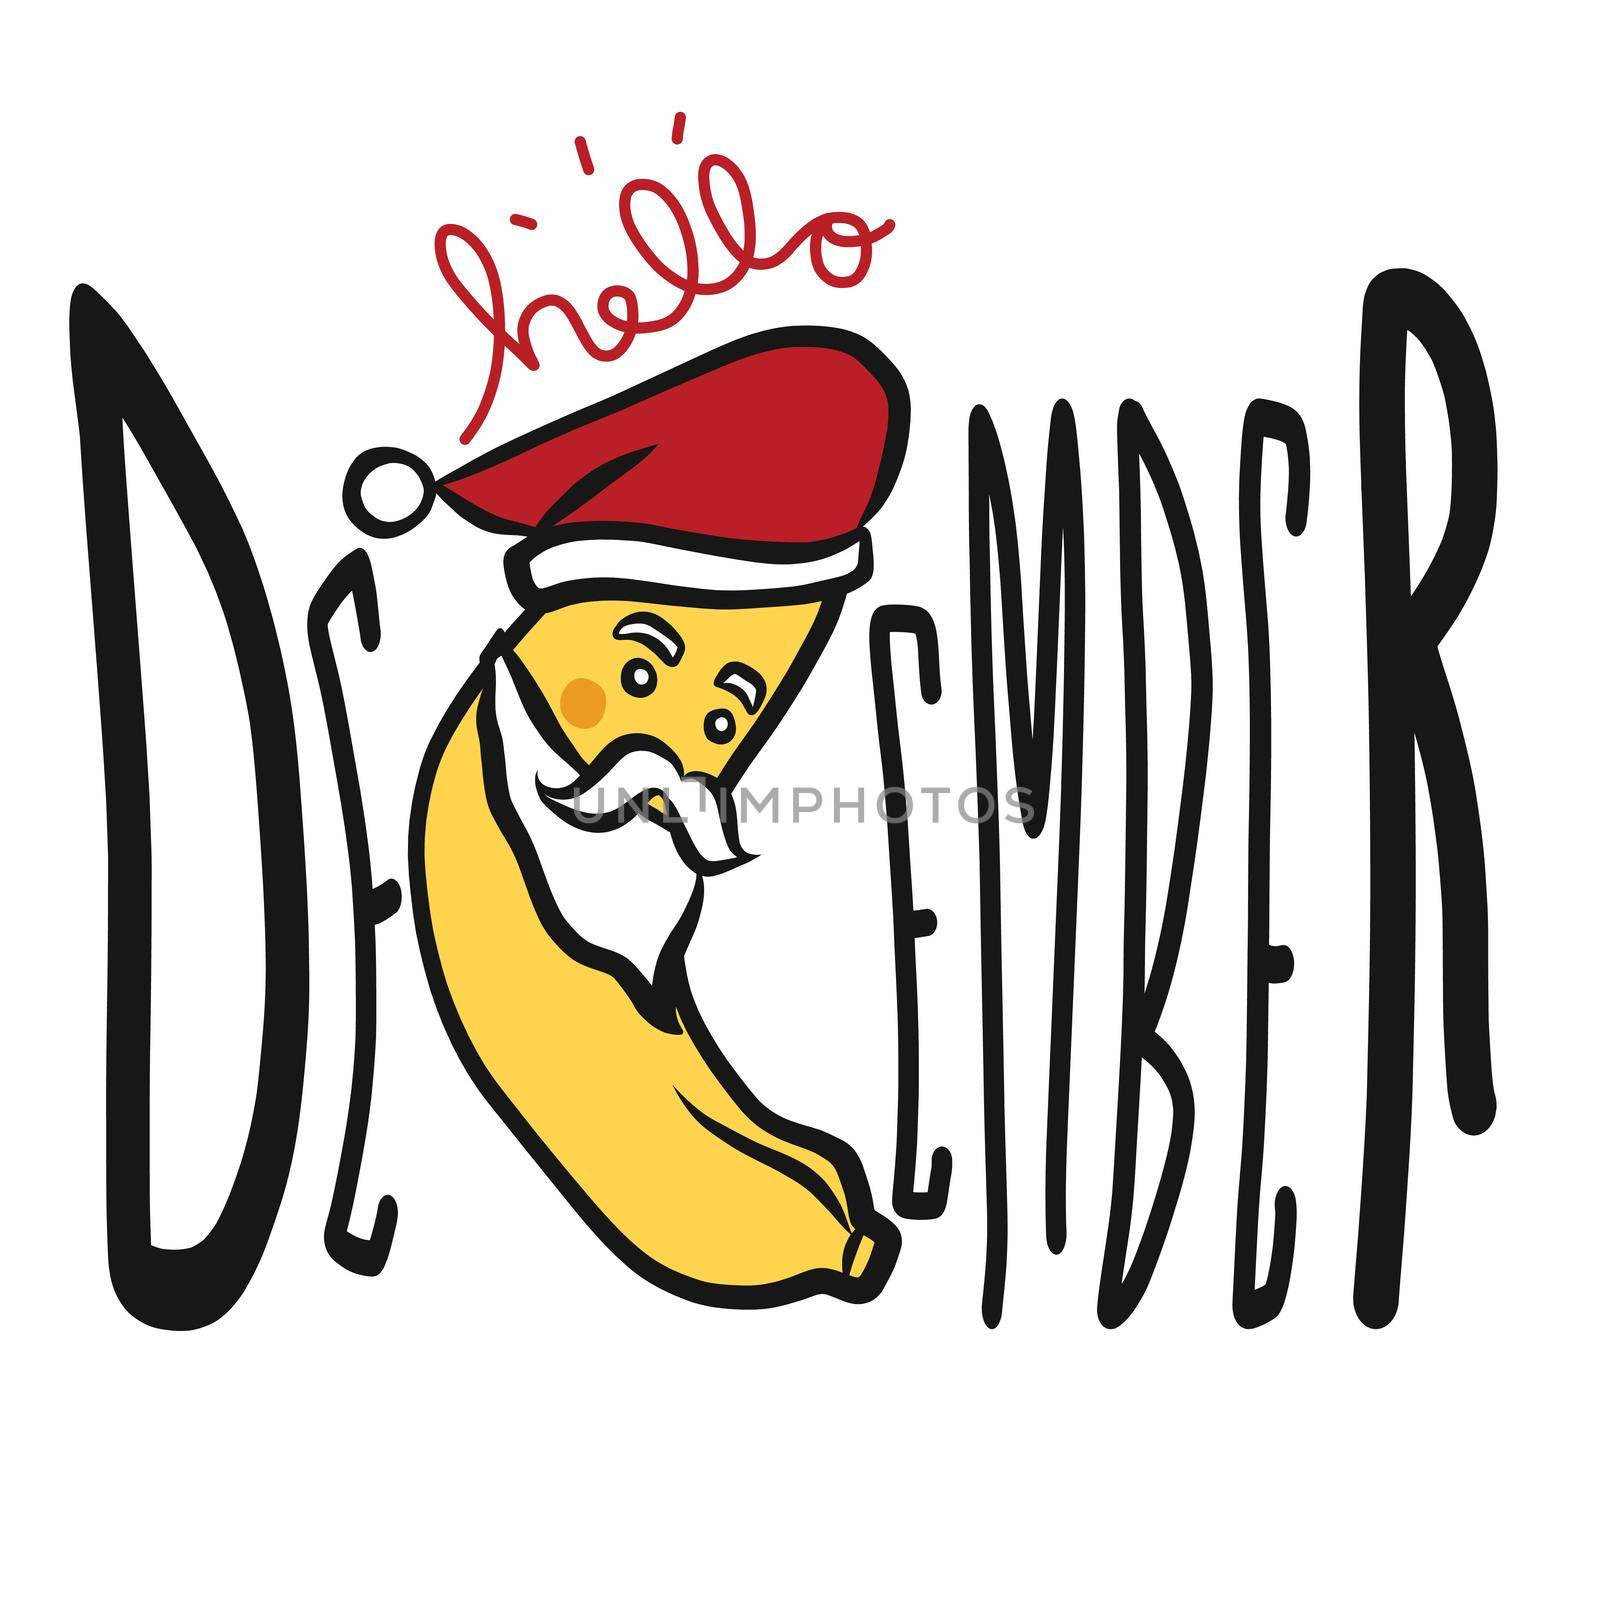 Hello December Santa banana cartoon vector illustration by Yoopho